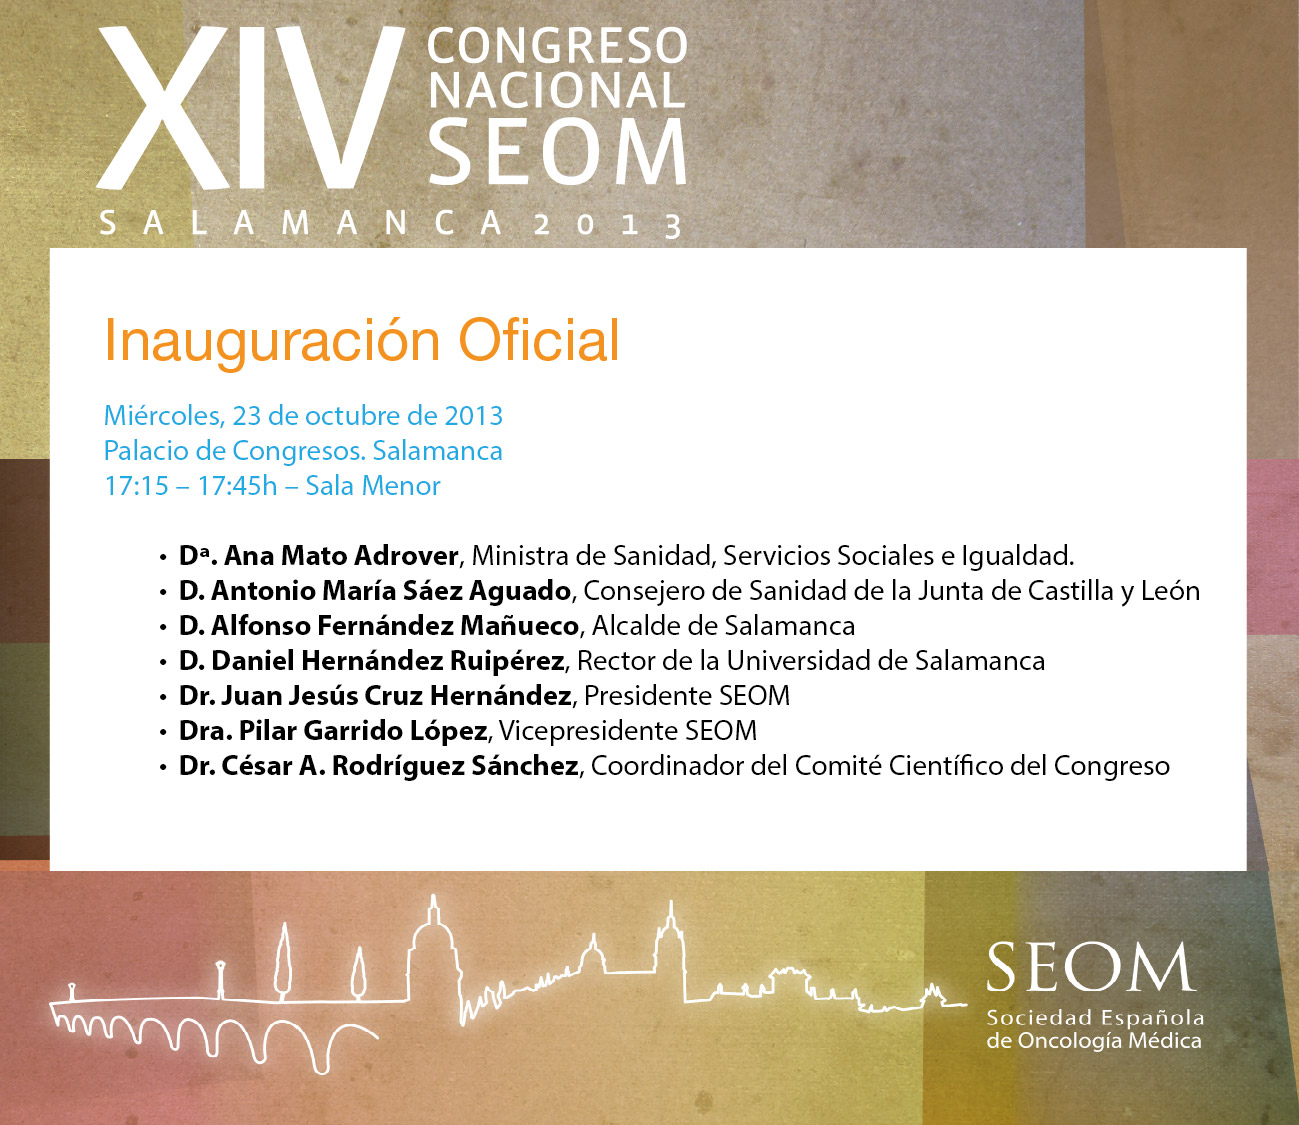 Inauguración Oficial del XIV Congreso Nacional SEOM